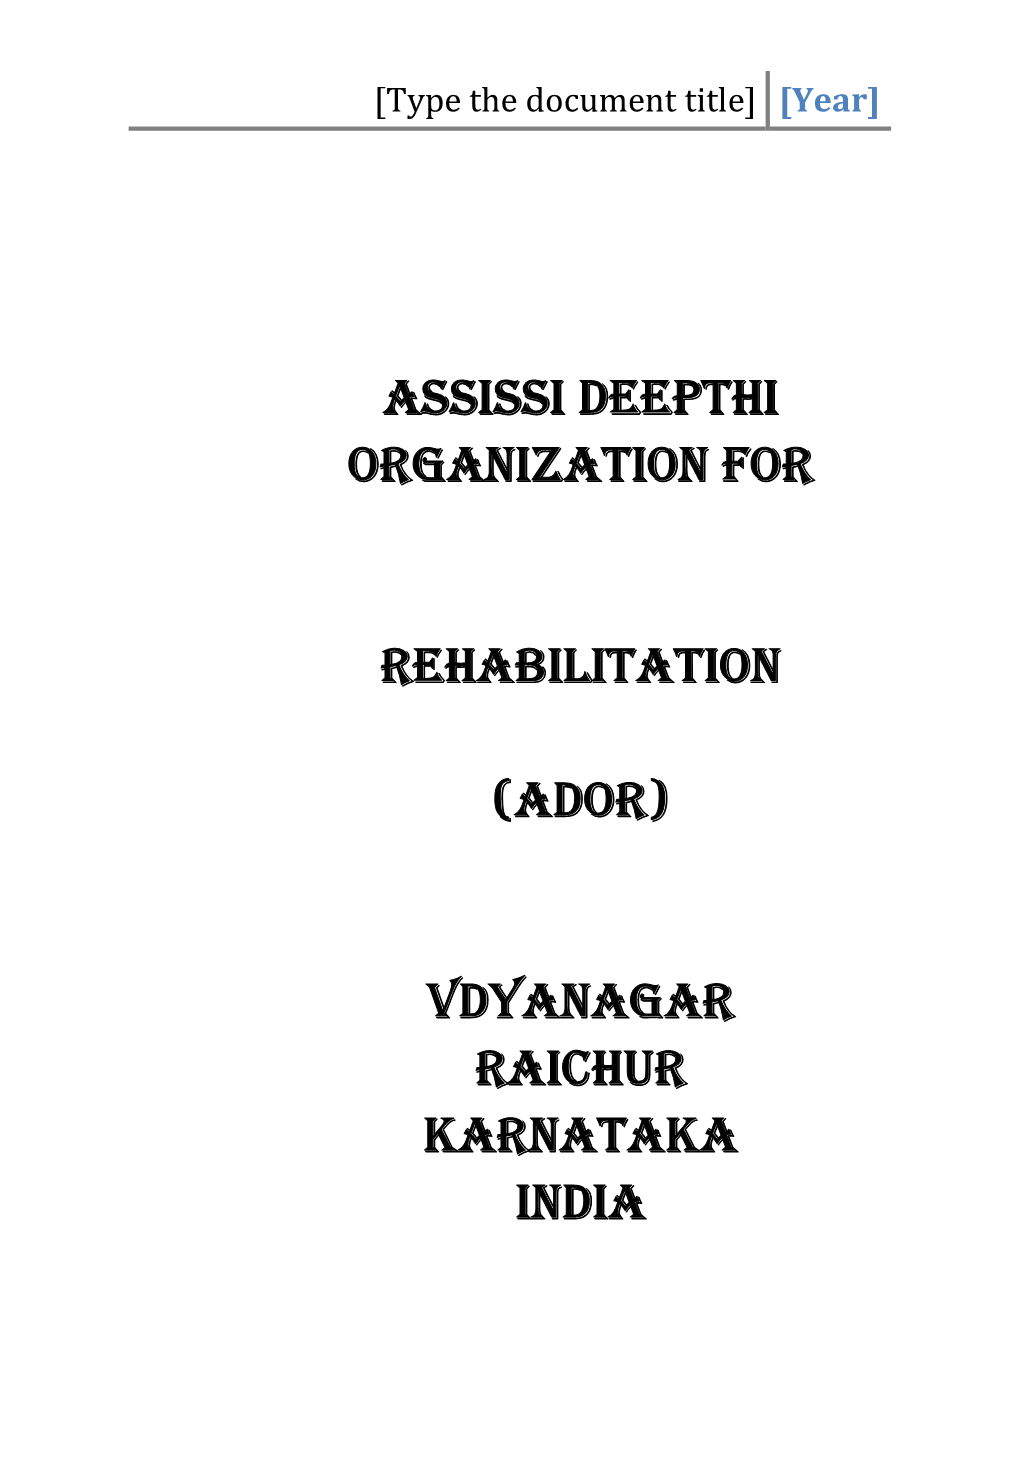 Annual Report, CBR Project, Raichur, Karnataka, India